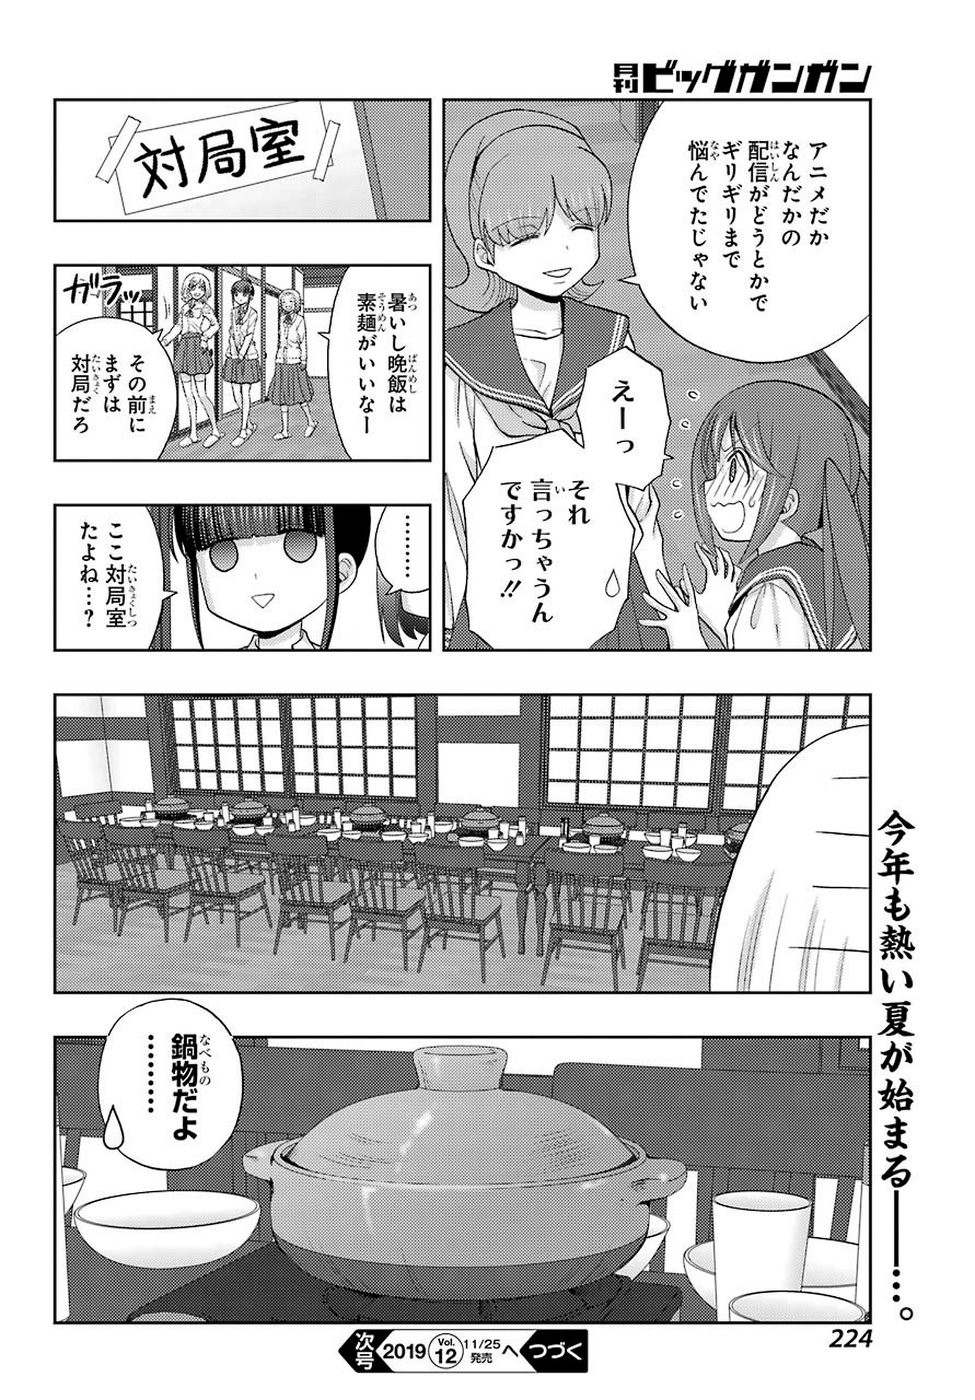 Shinohayu - The Dawn of Age Manga - Chapter 073 - Page 24